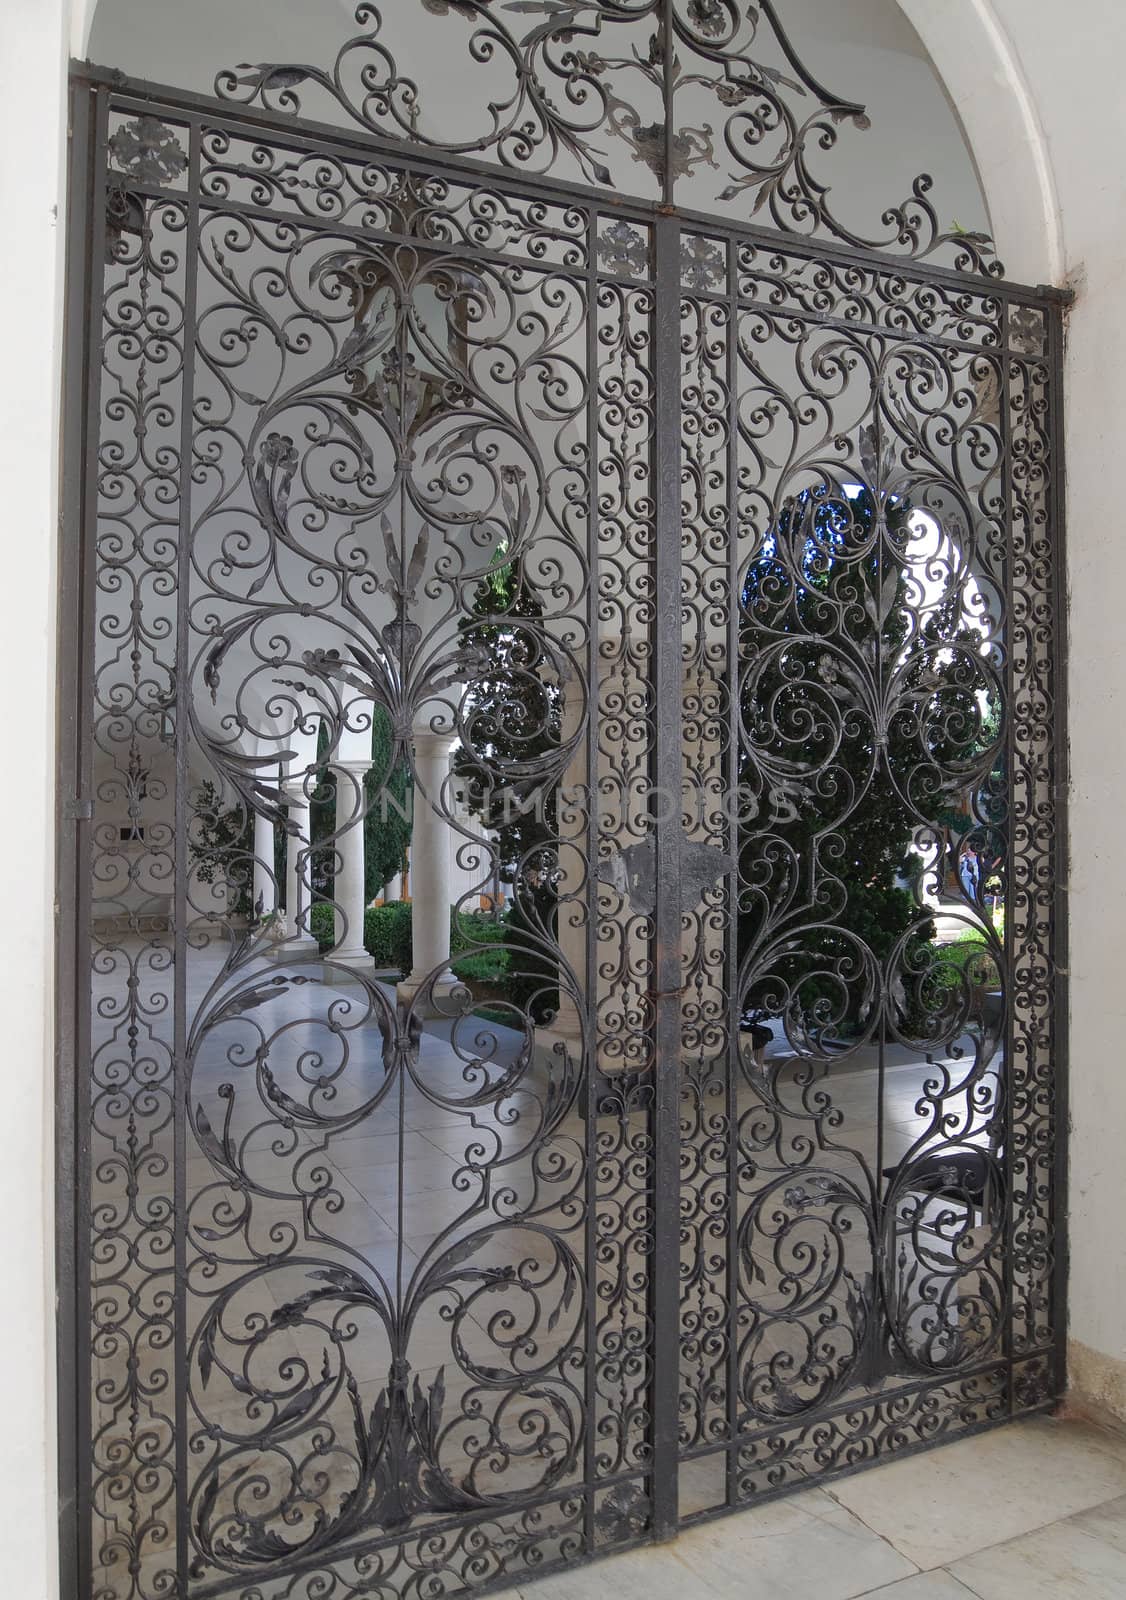 Iron-shod gates of Italian patio by kvinoz